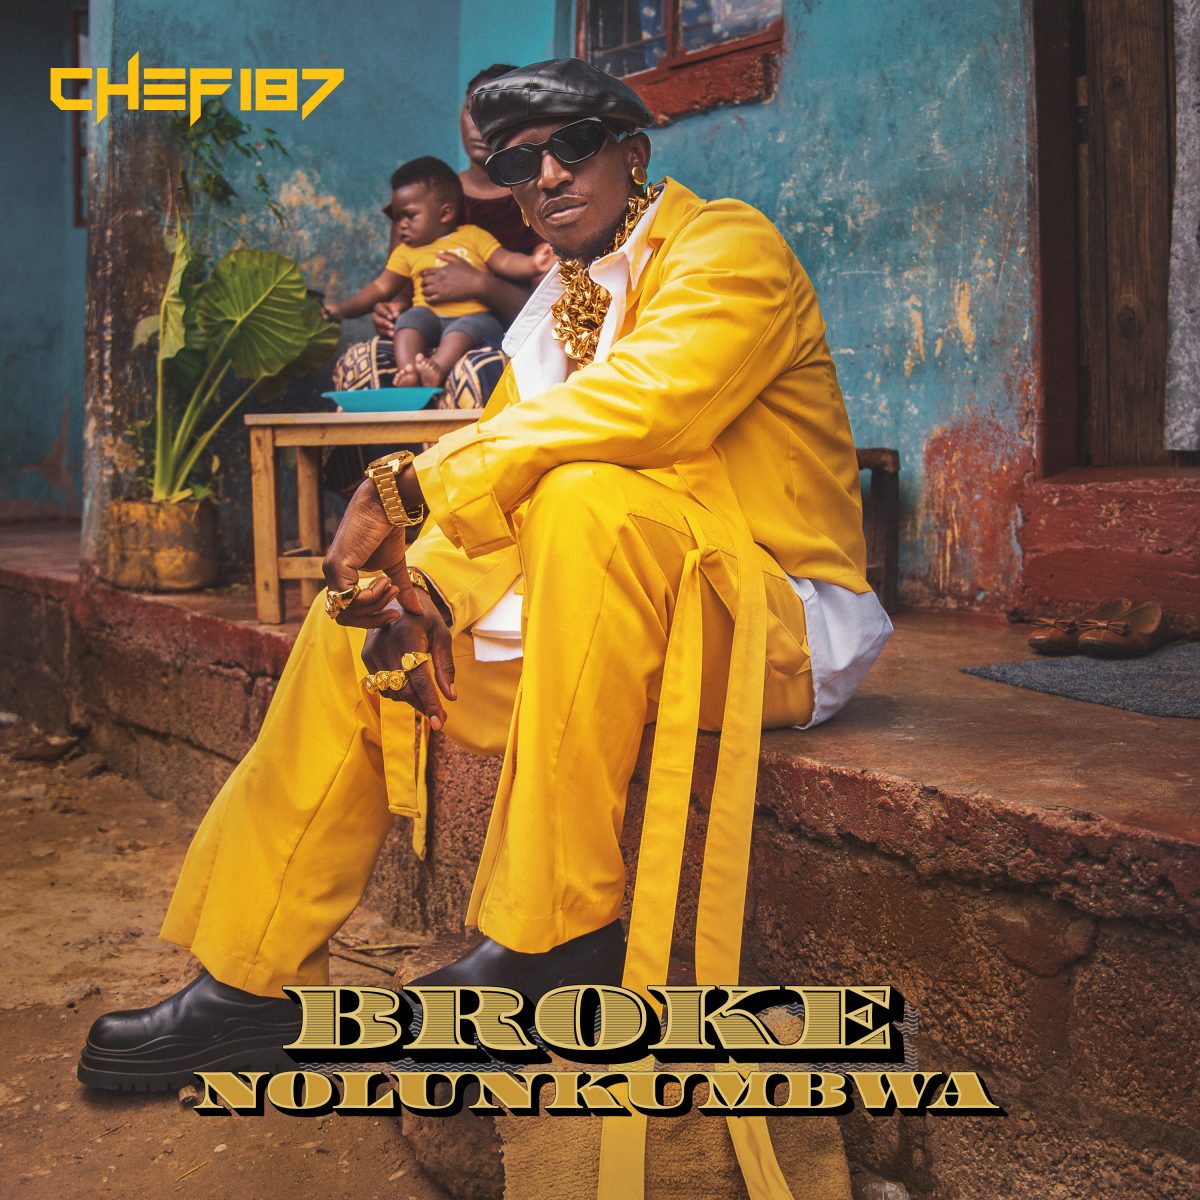 Chef 187 - Broke Nolunkumbwa (Full ALBUM) Mp3 Download